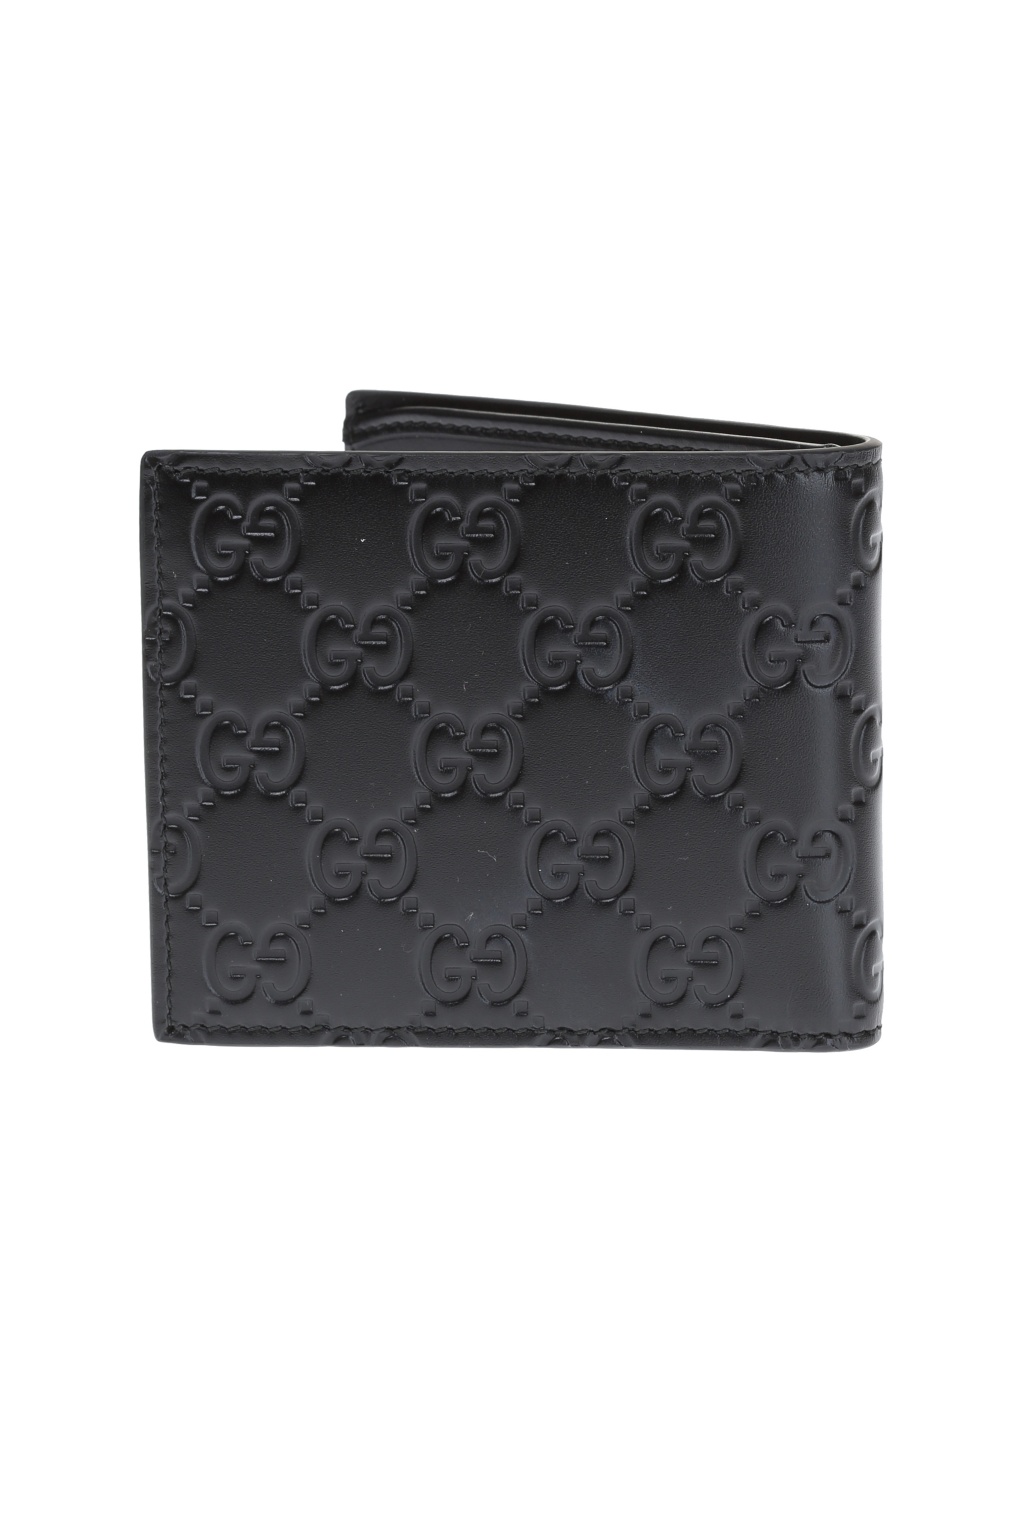 gucci black guccissima leather wallet